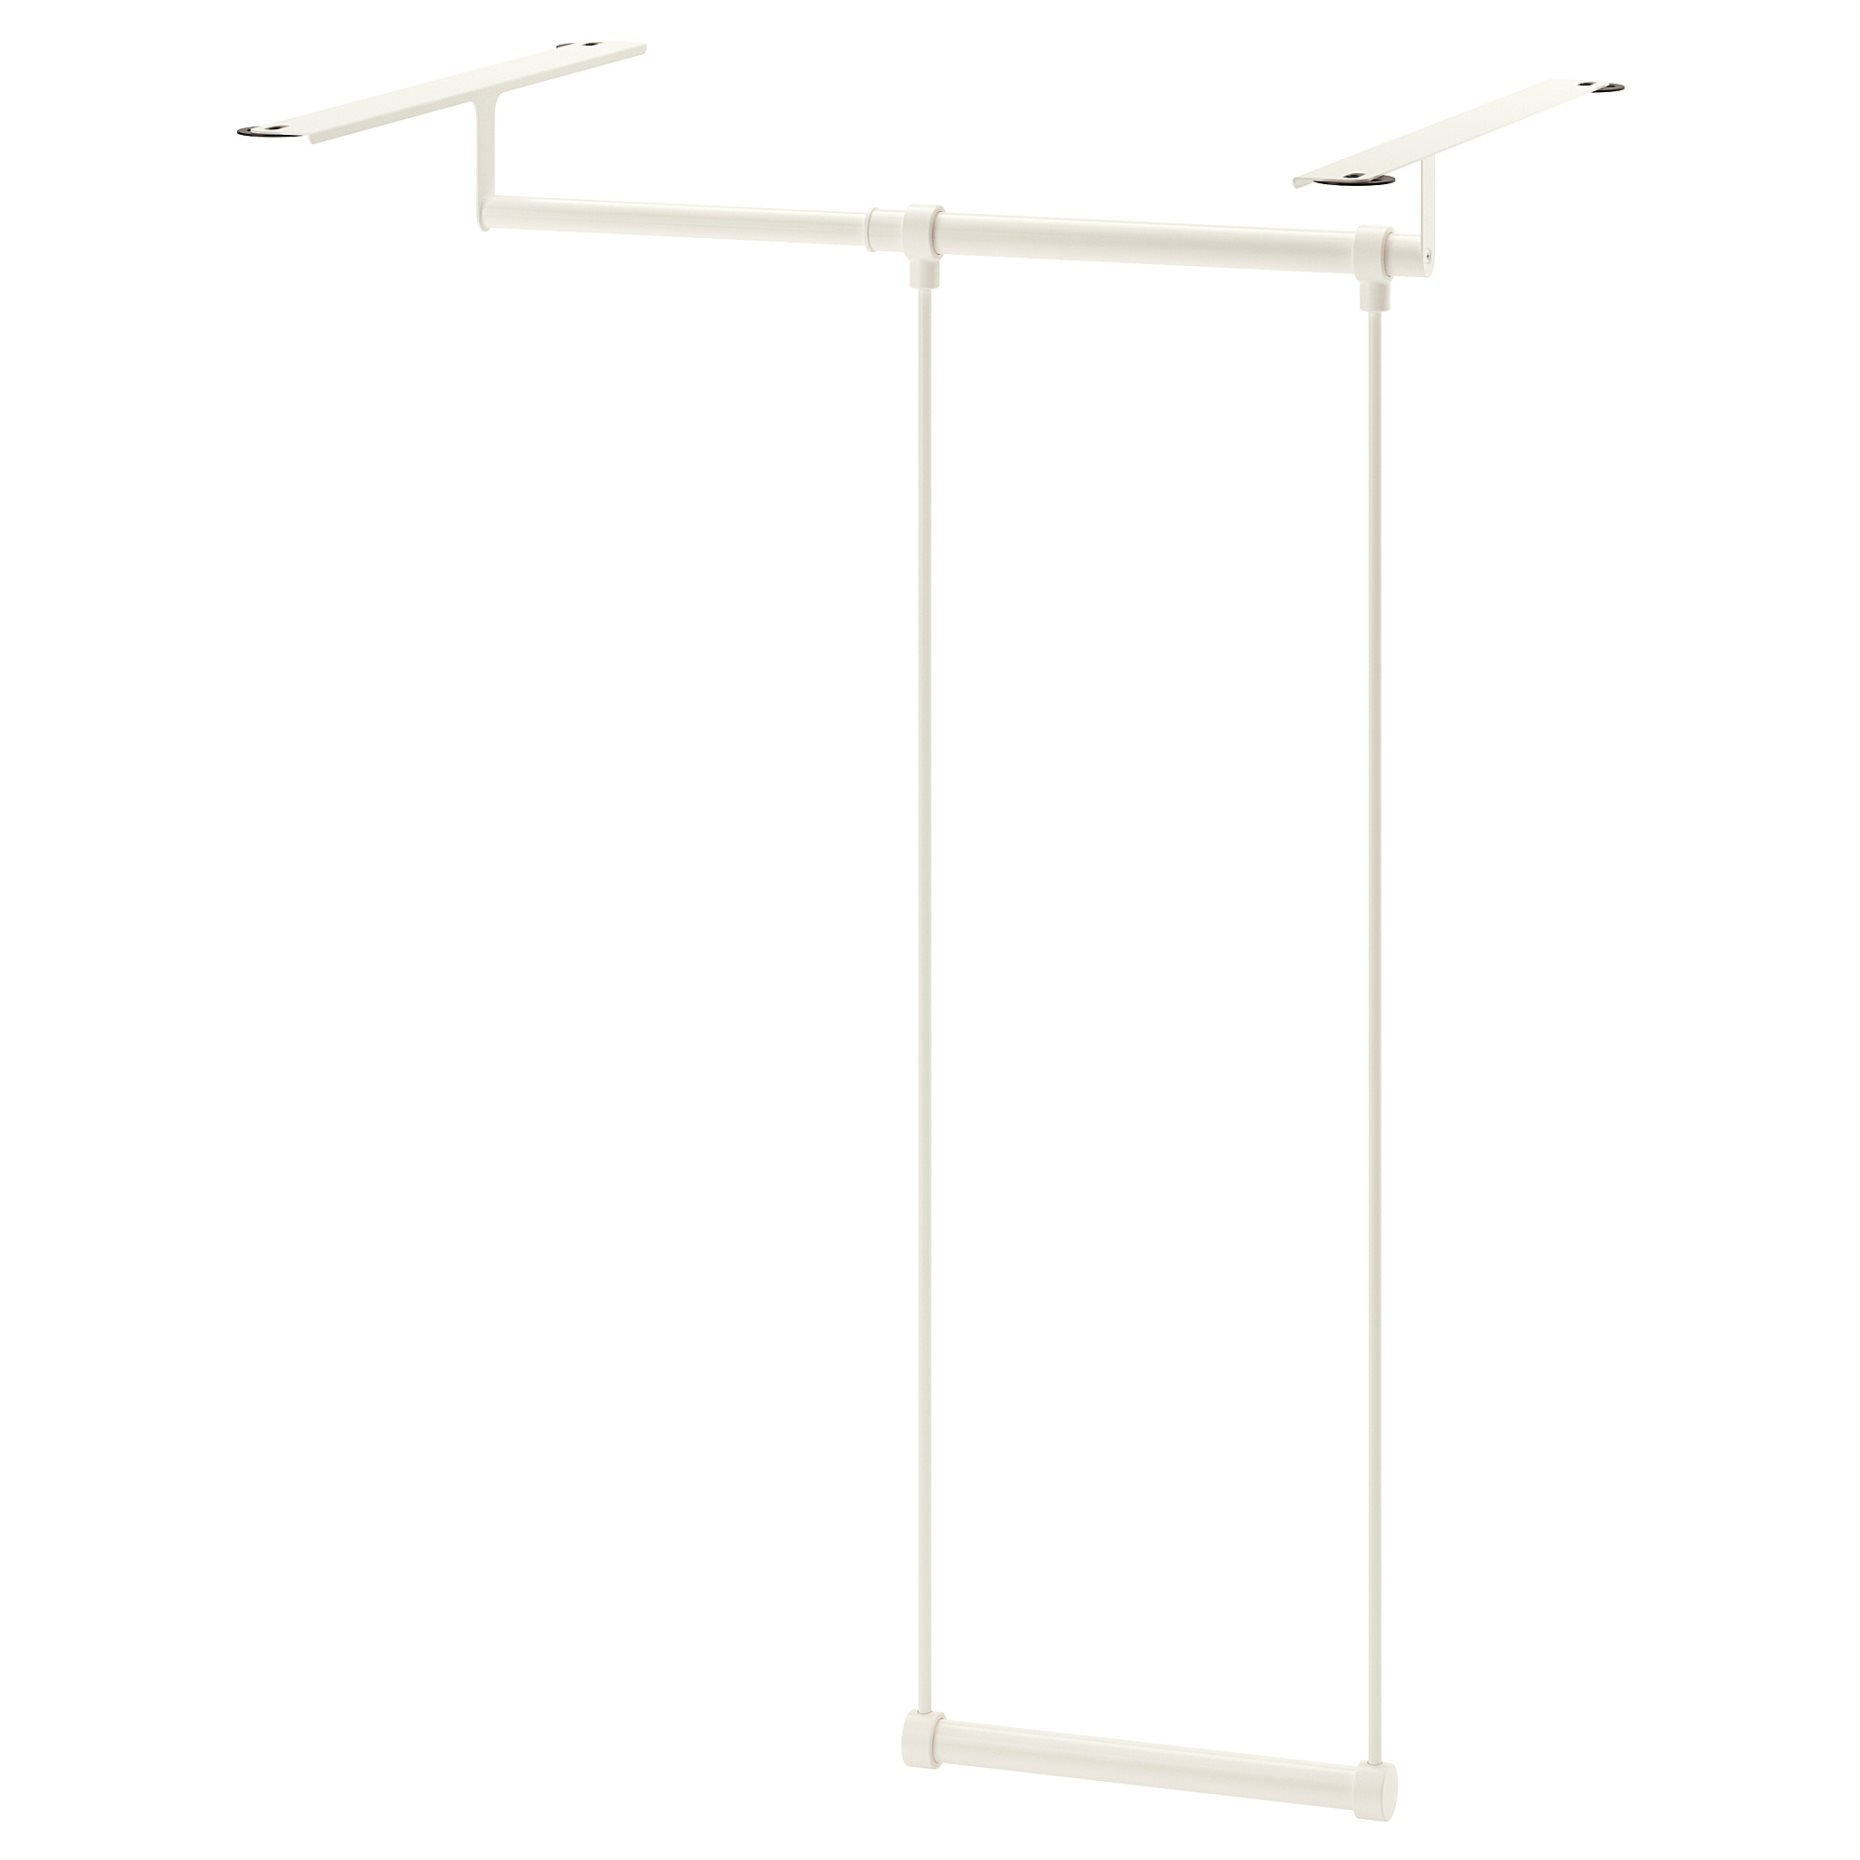 LÄTTHET, clothes rail for frame, 903.317.17